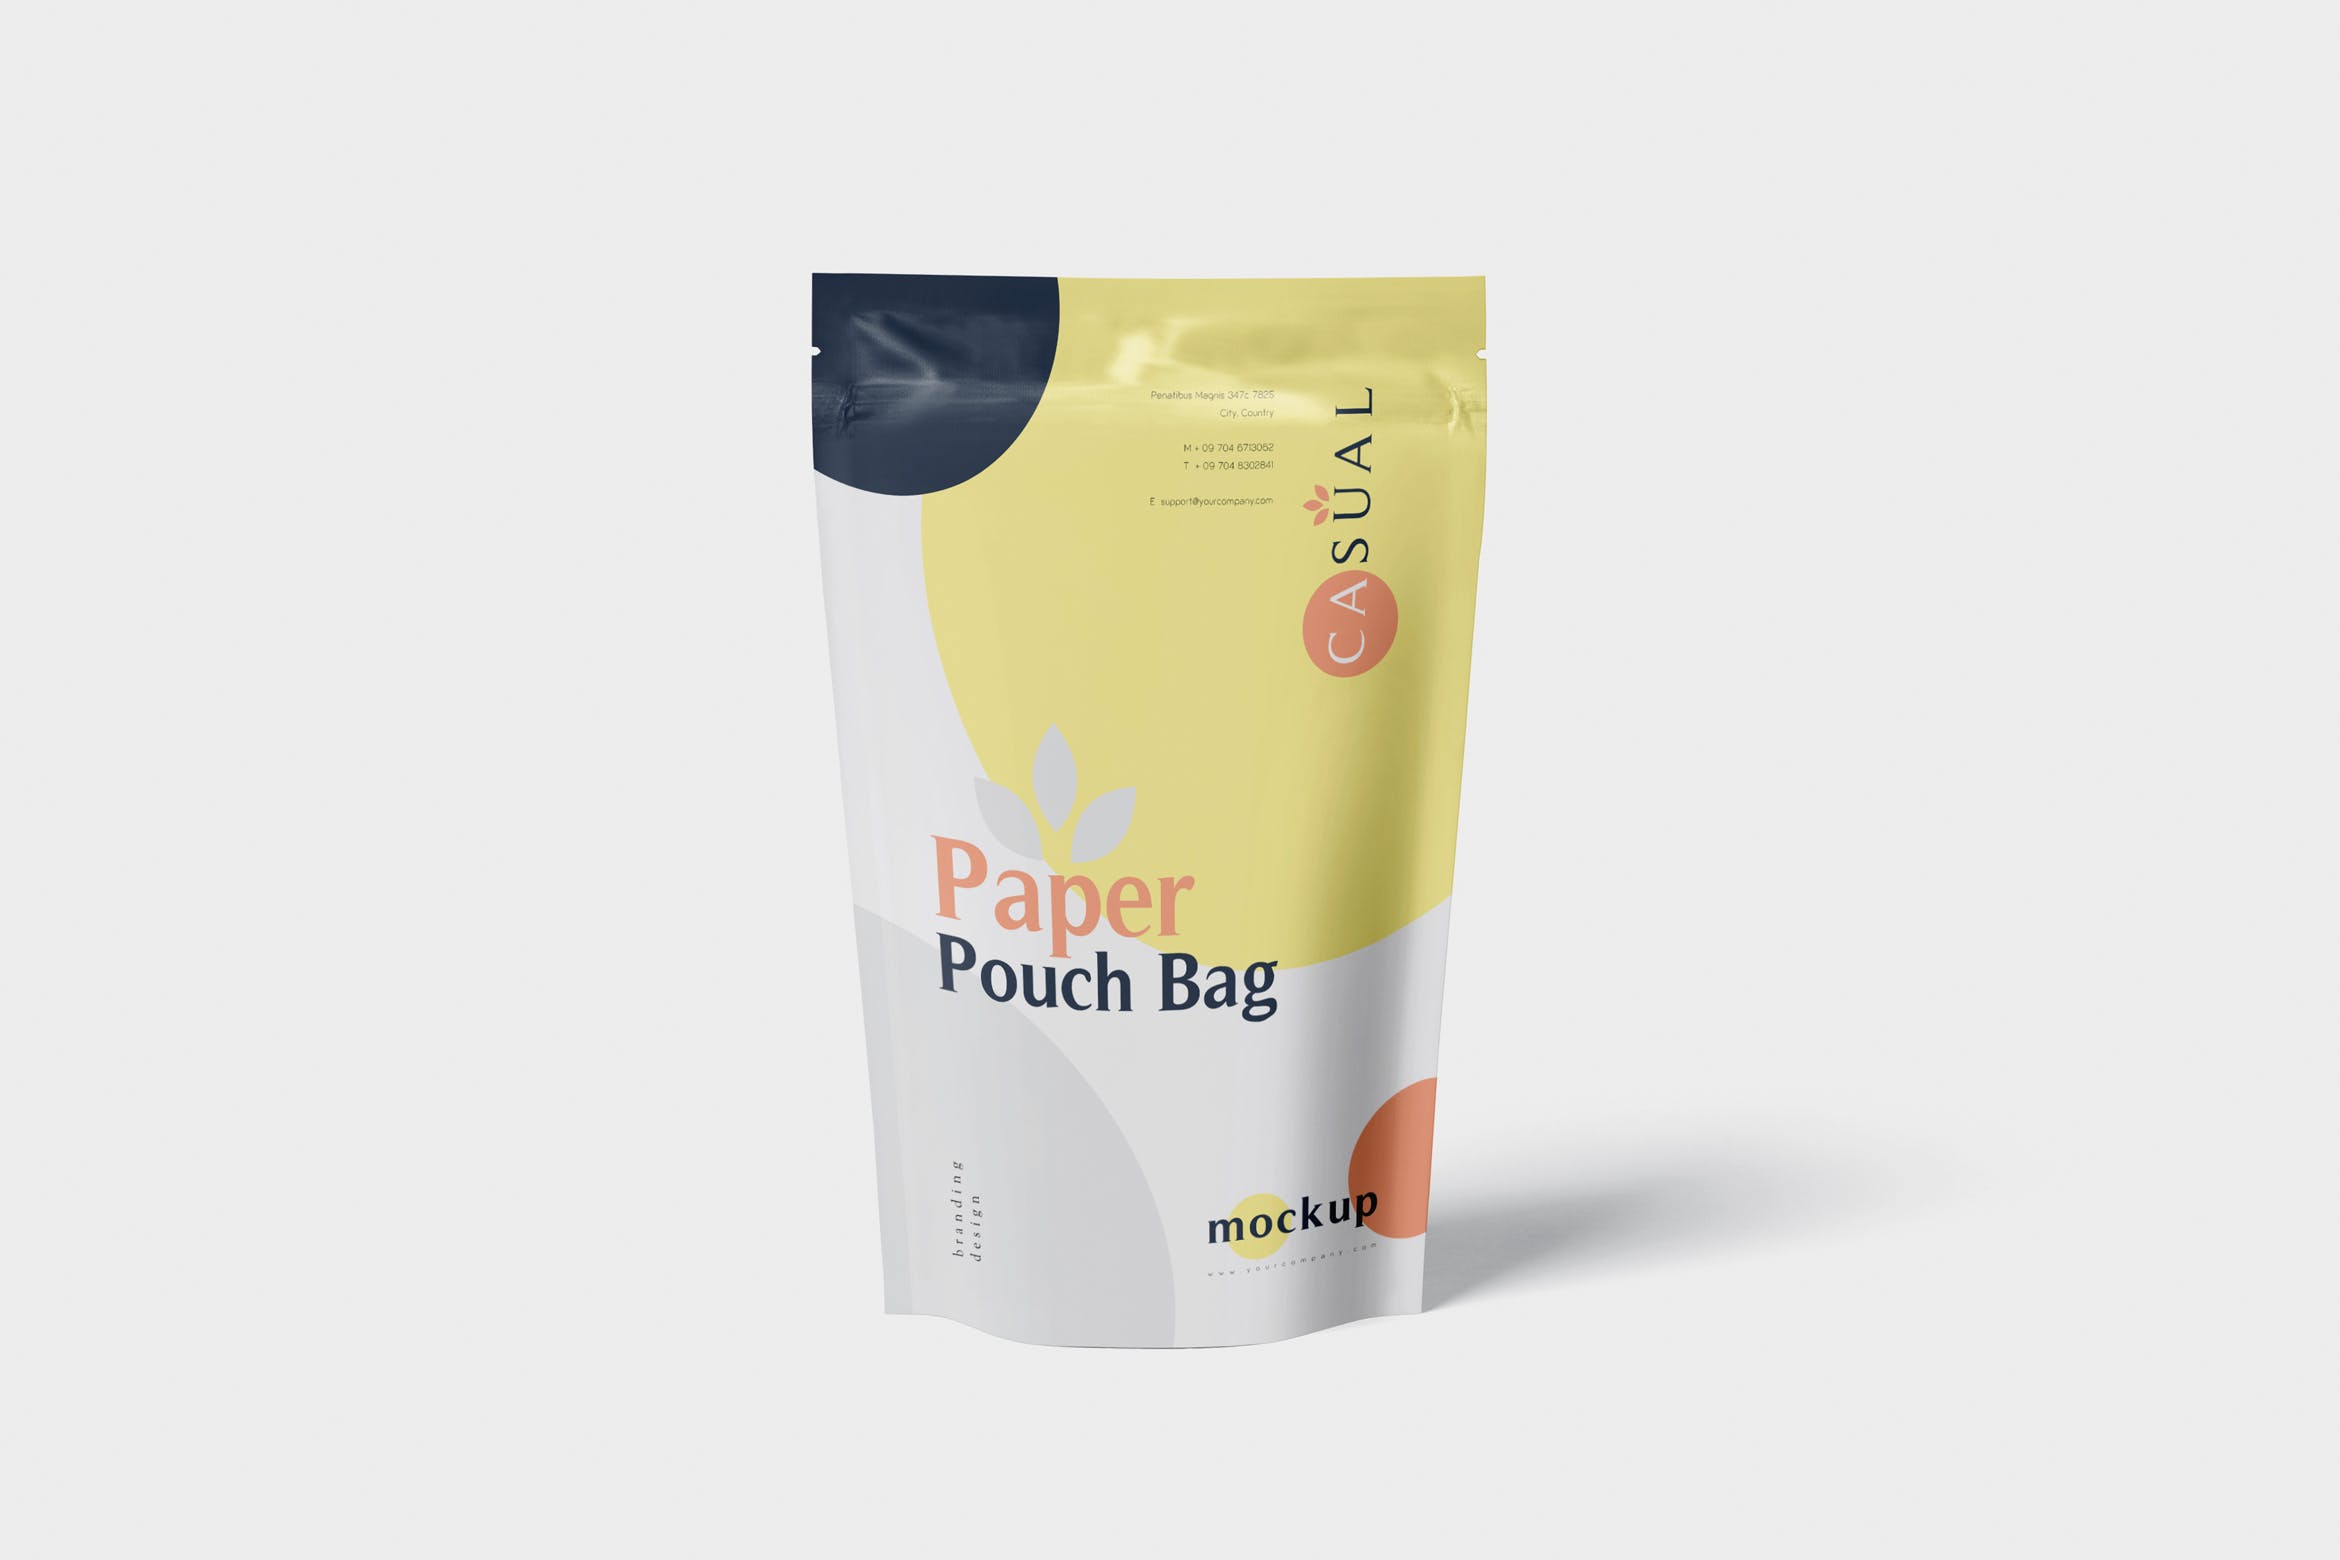 食品自封袋包装设计效果图大洋岛精选 Paper Pouch Bag Mockup – Large Size插图